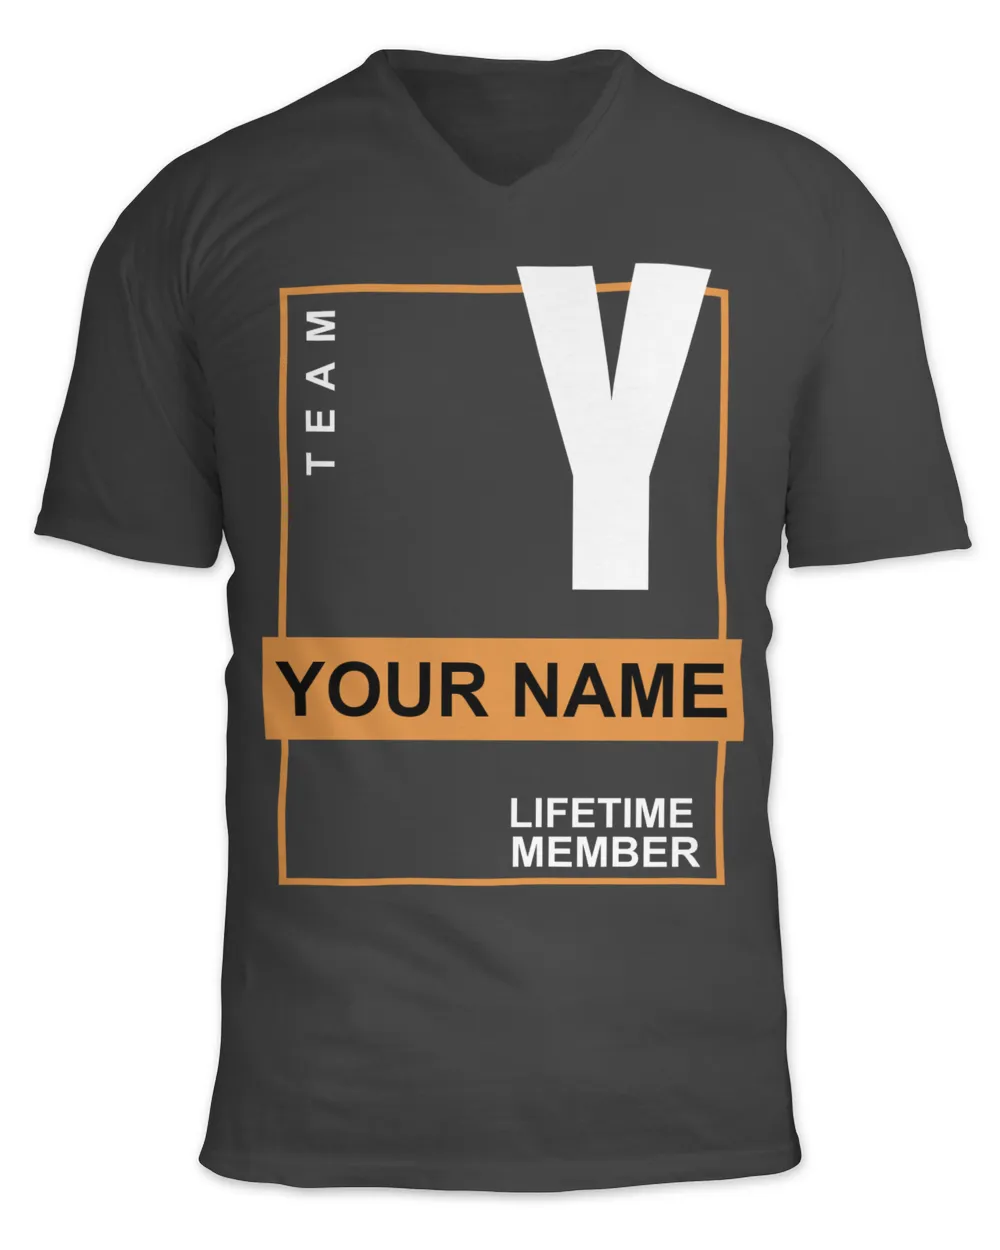 [Personalize] Team Y lifetime member